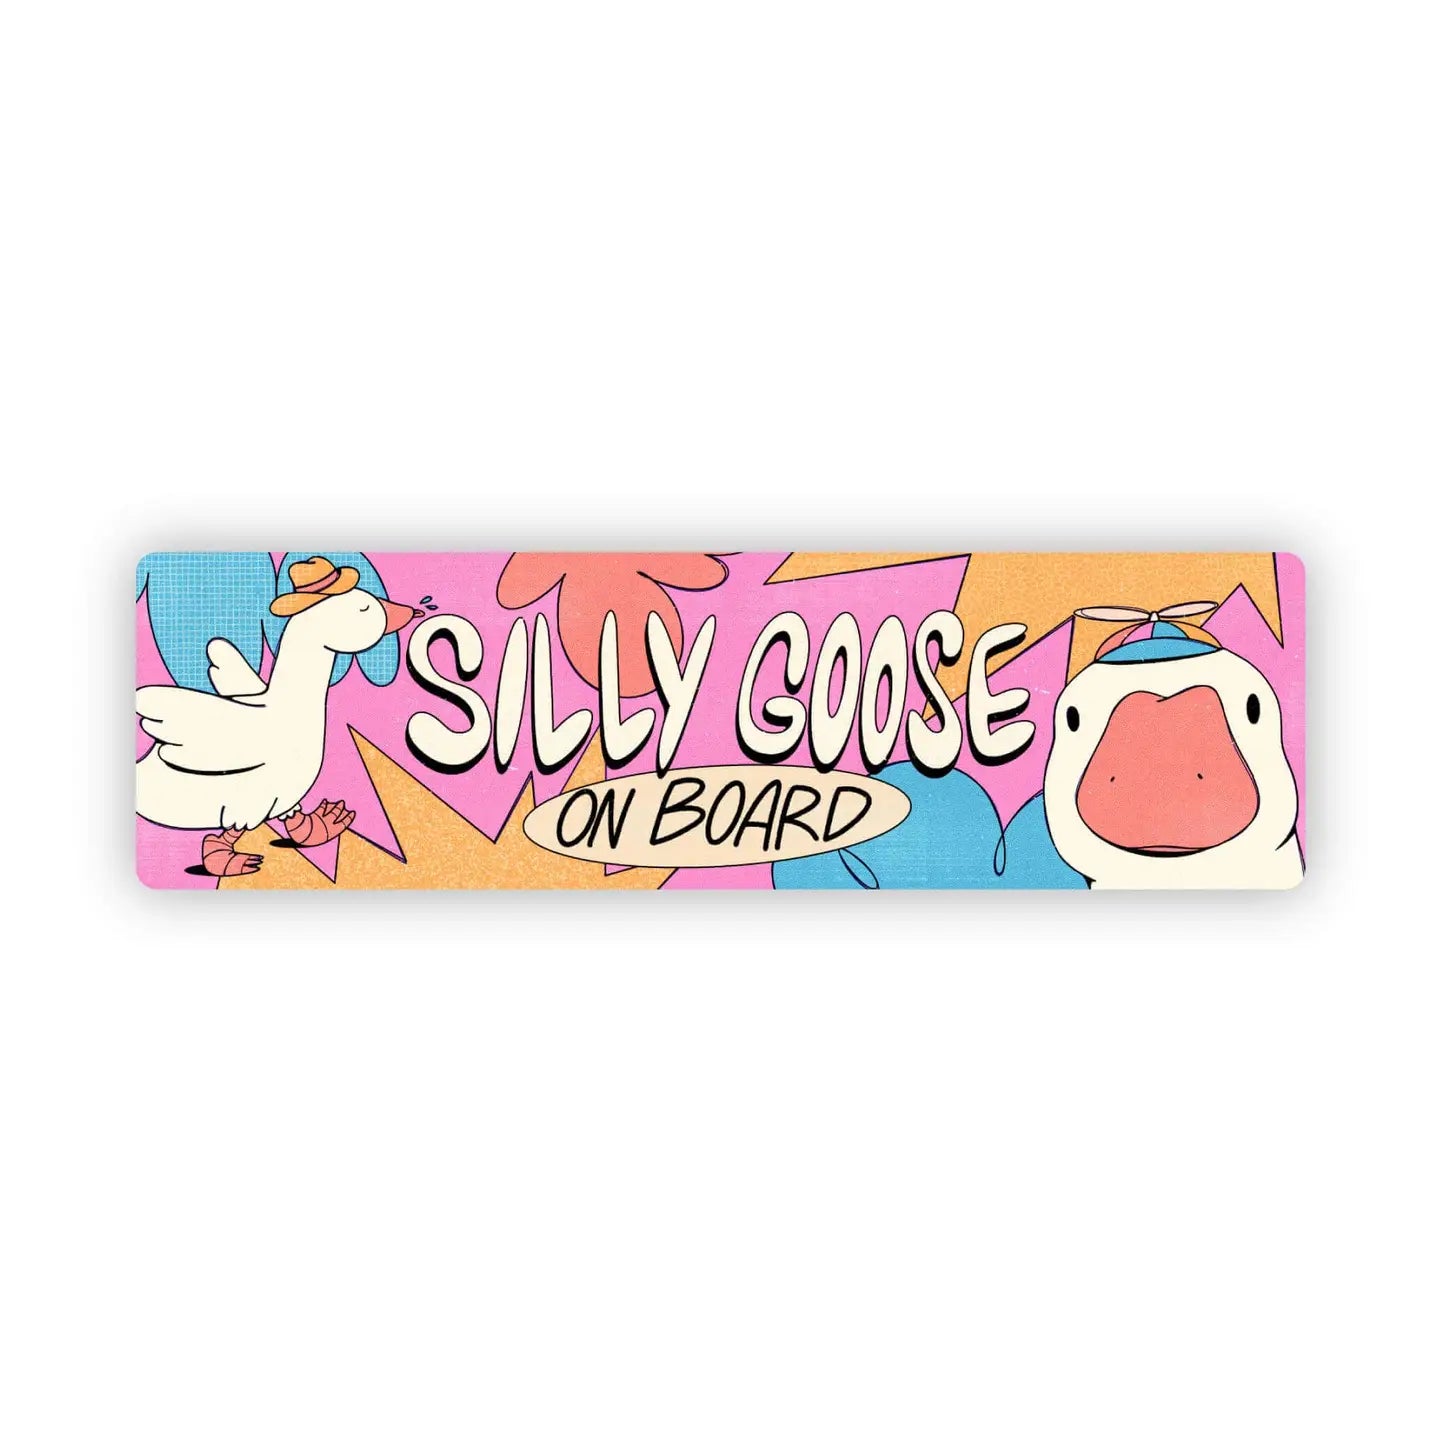 Silly Goose On Board Bumper Sticker